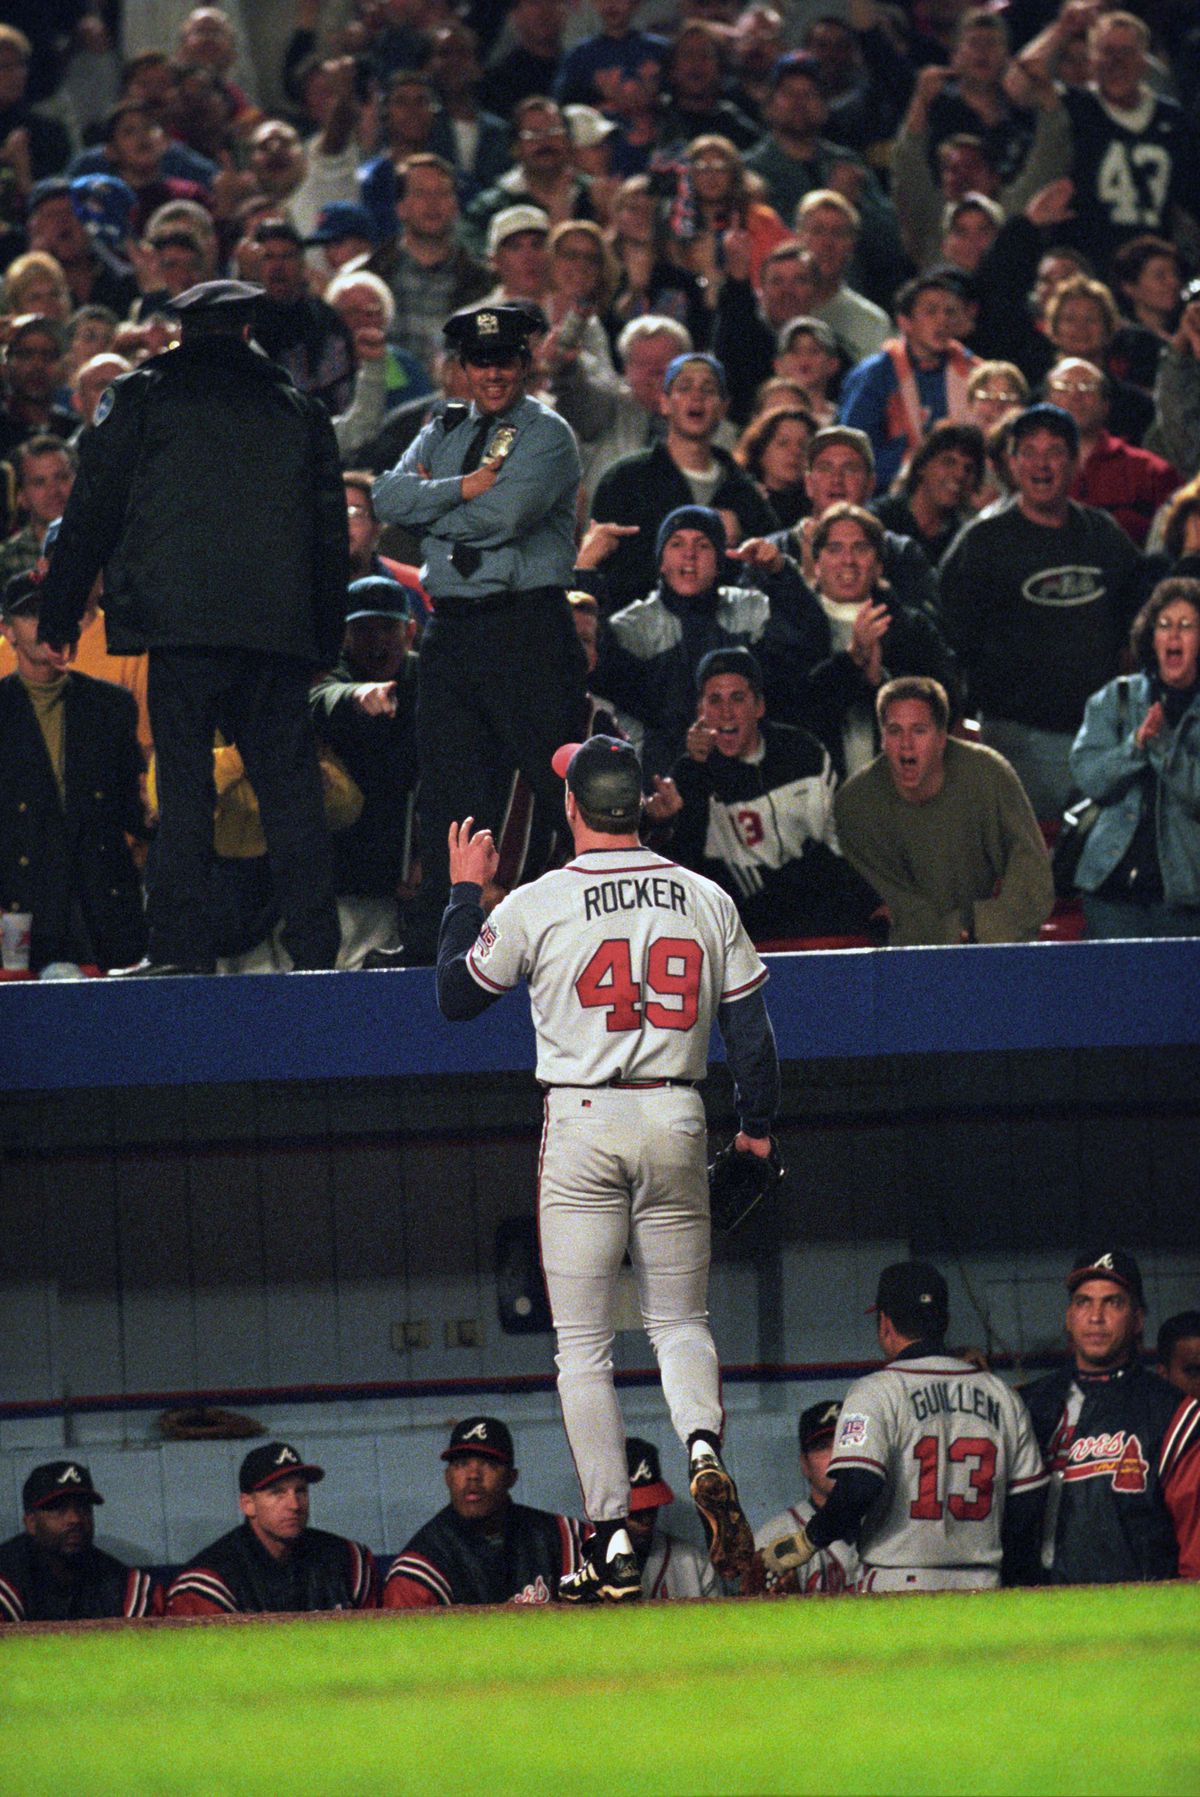 New York Mets vs Atlanta Braves, 1999 National League Championship Series